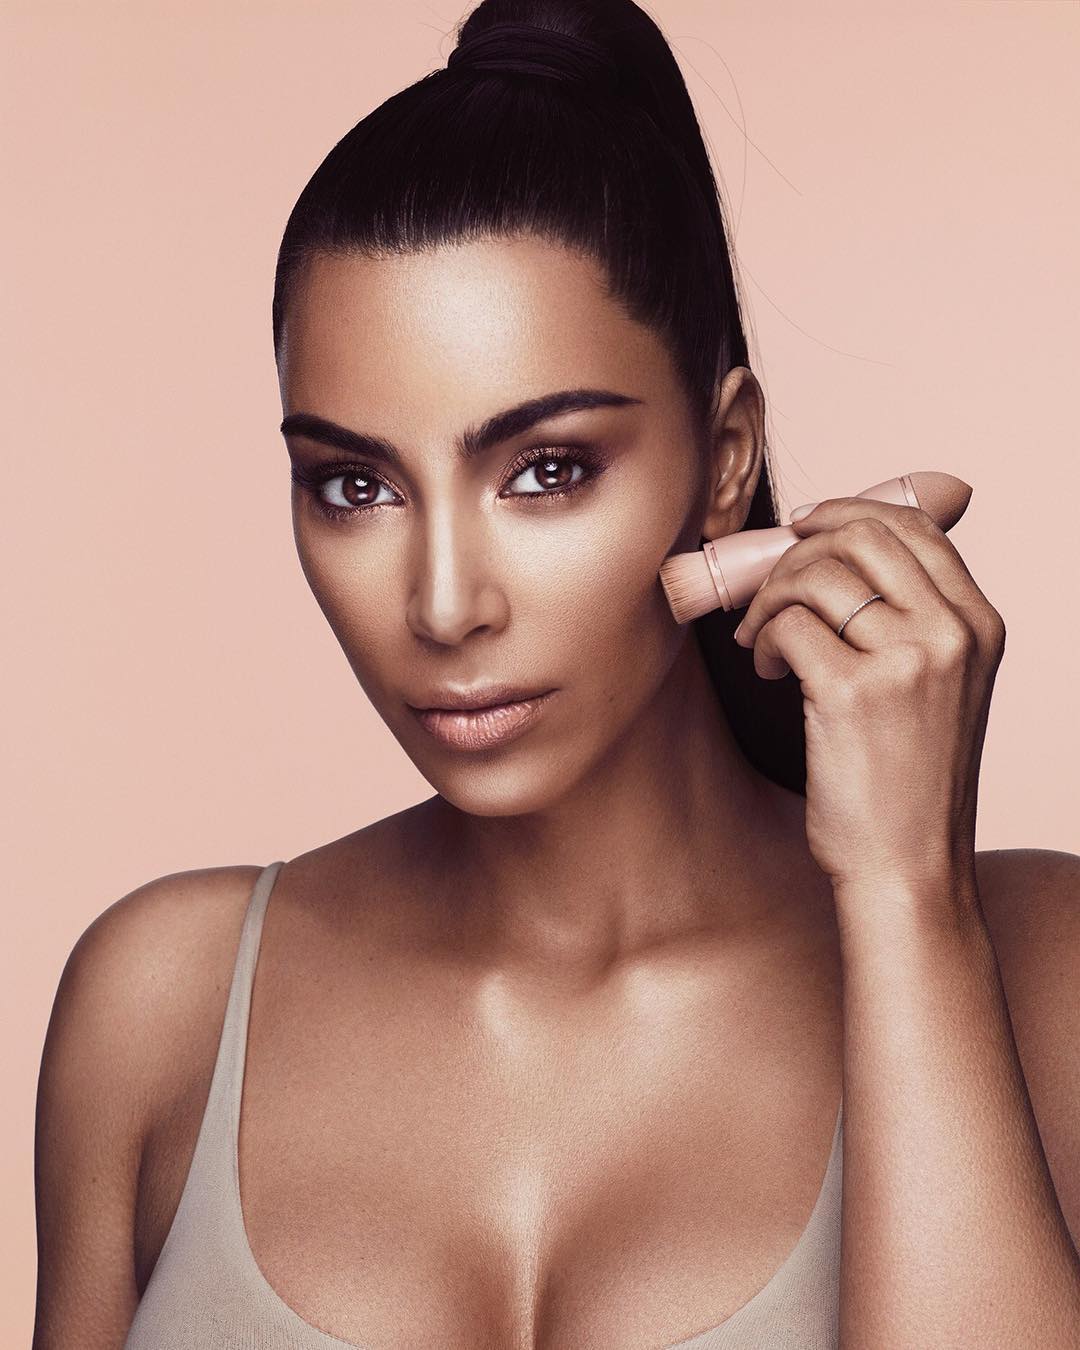 La nueva línea de belleza de Kim Kardashian West ¿Competirá con Kylie Jenner?